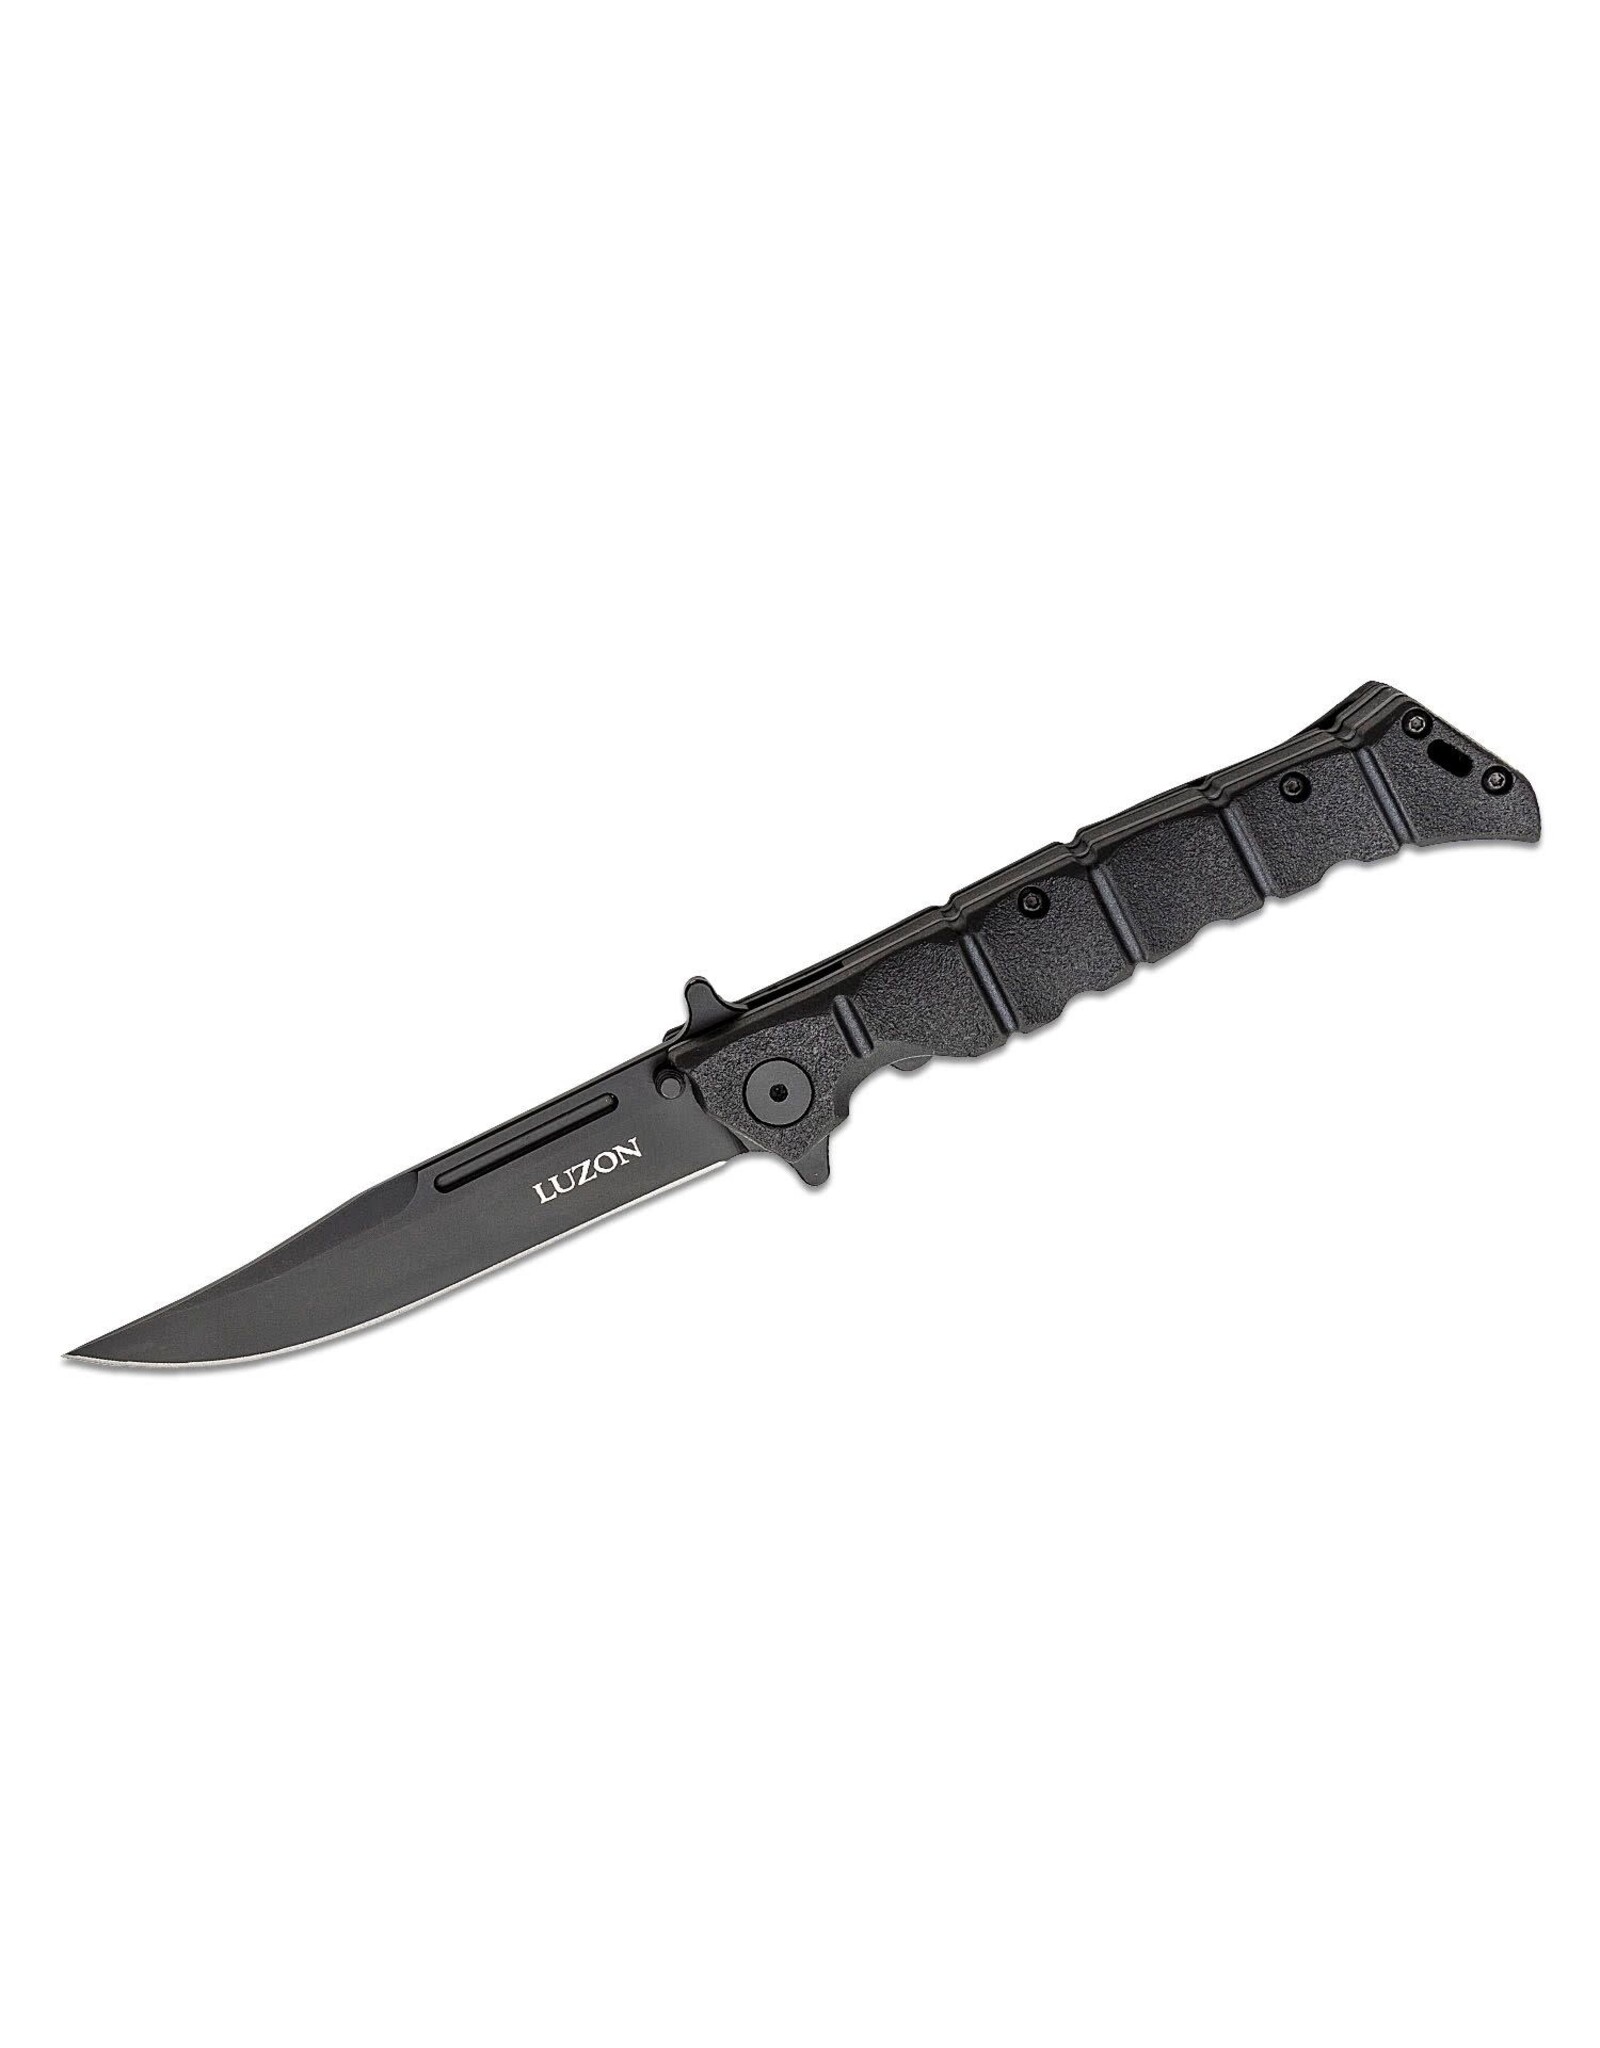 Cold Steel Cold Steel 20NQL-BKBK Medium Luzon Flipper Knife 4" Black Plain Blade, Black GFN Handles, Liner Lock